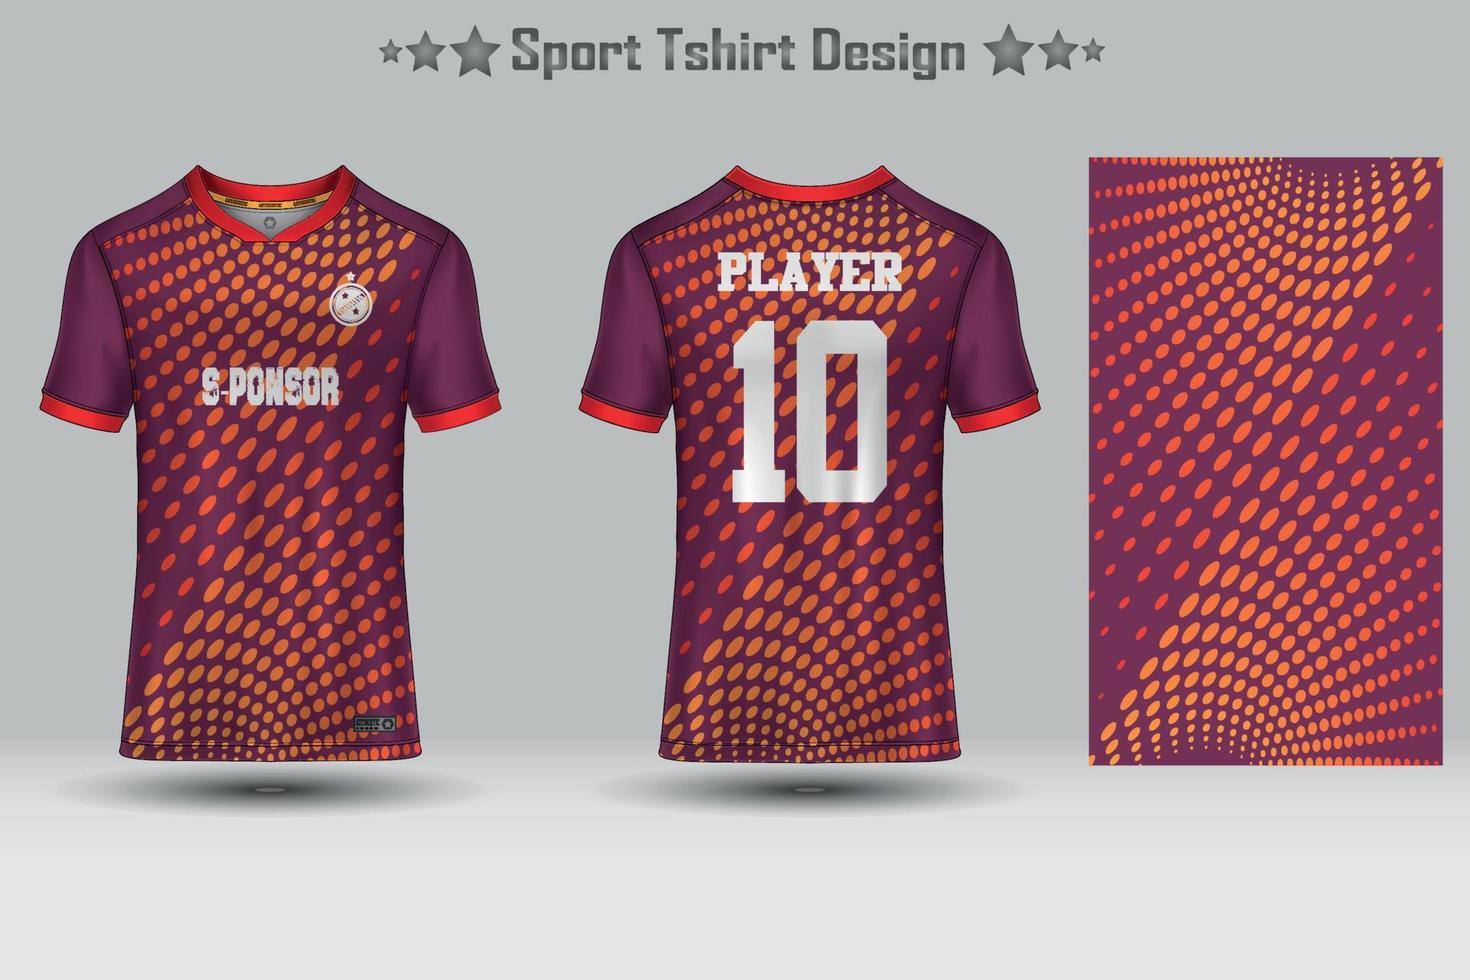 Fußballsport Jersey Mockup abstraktes geometrisches Muster T-Shirt Design vektor